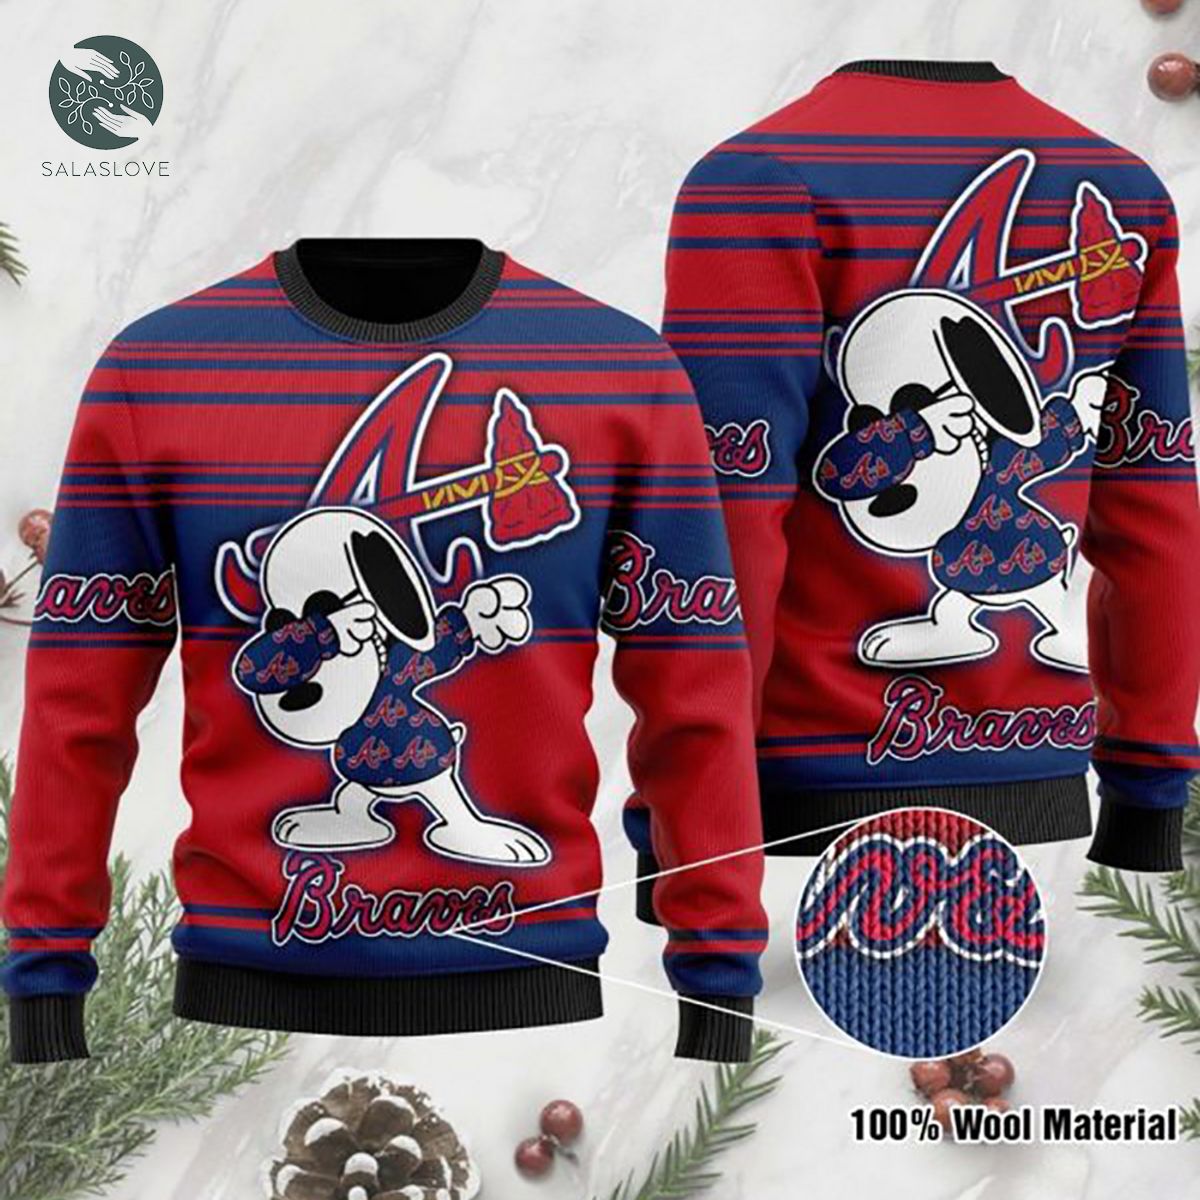 Snoopy Love Atlanta Braves MLB Fans Ugly Christmas Sweater

